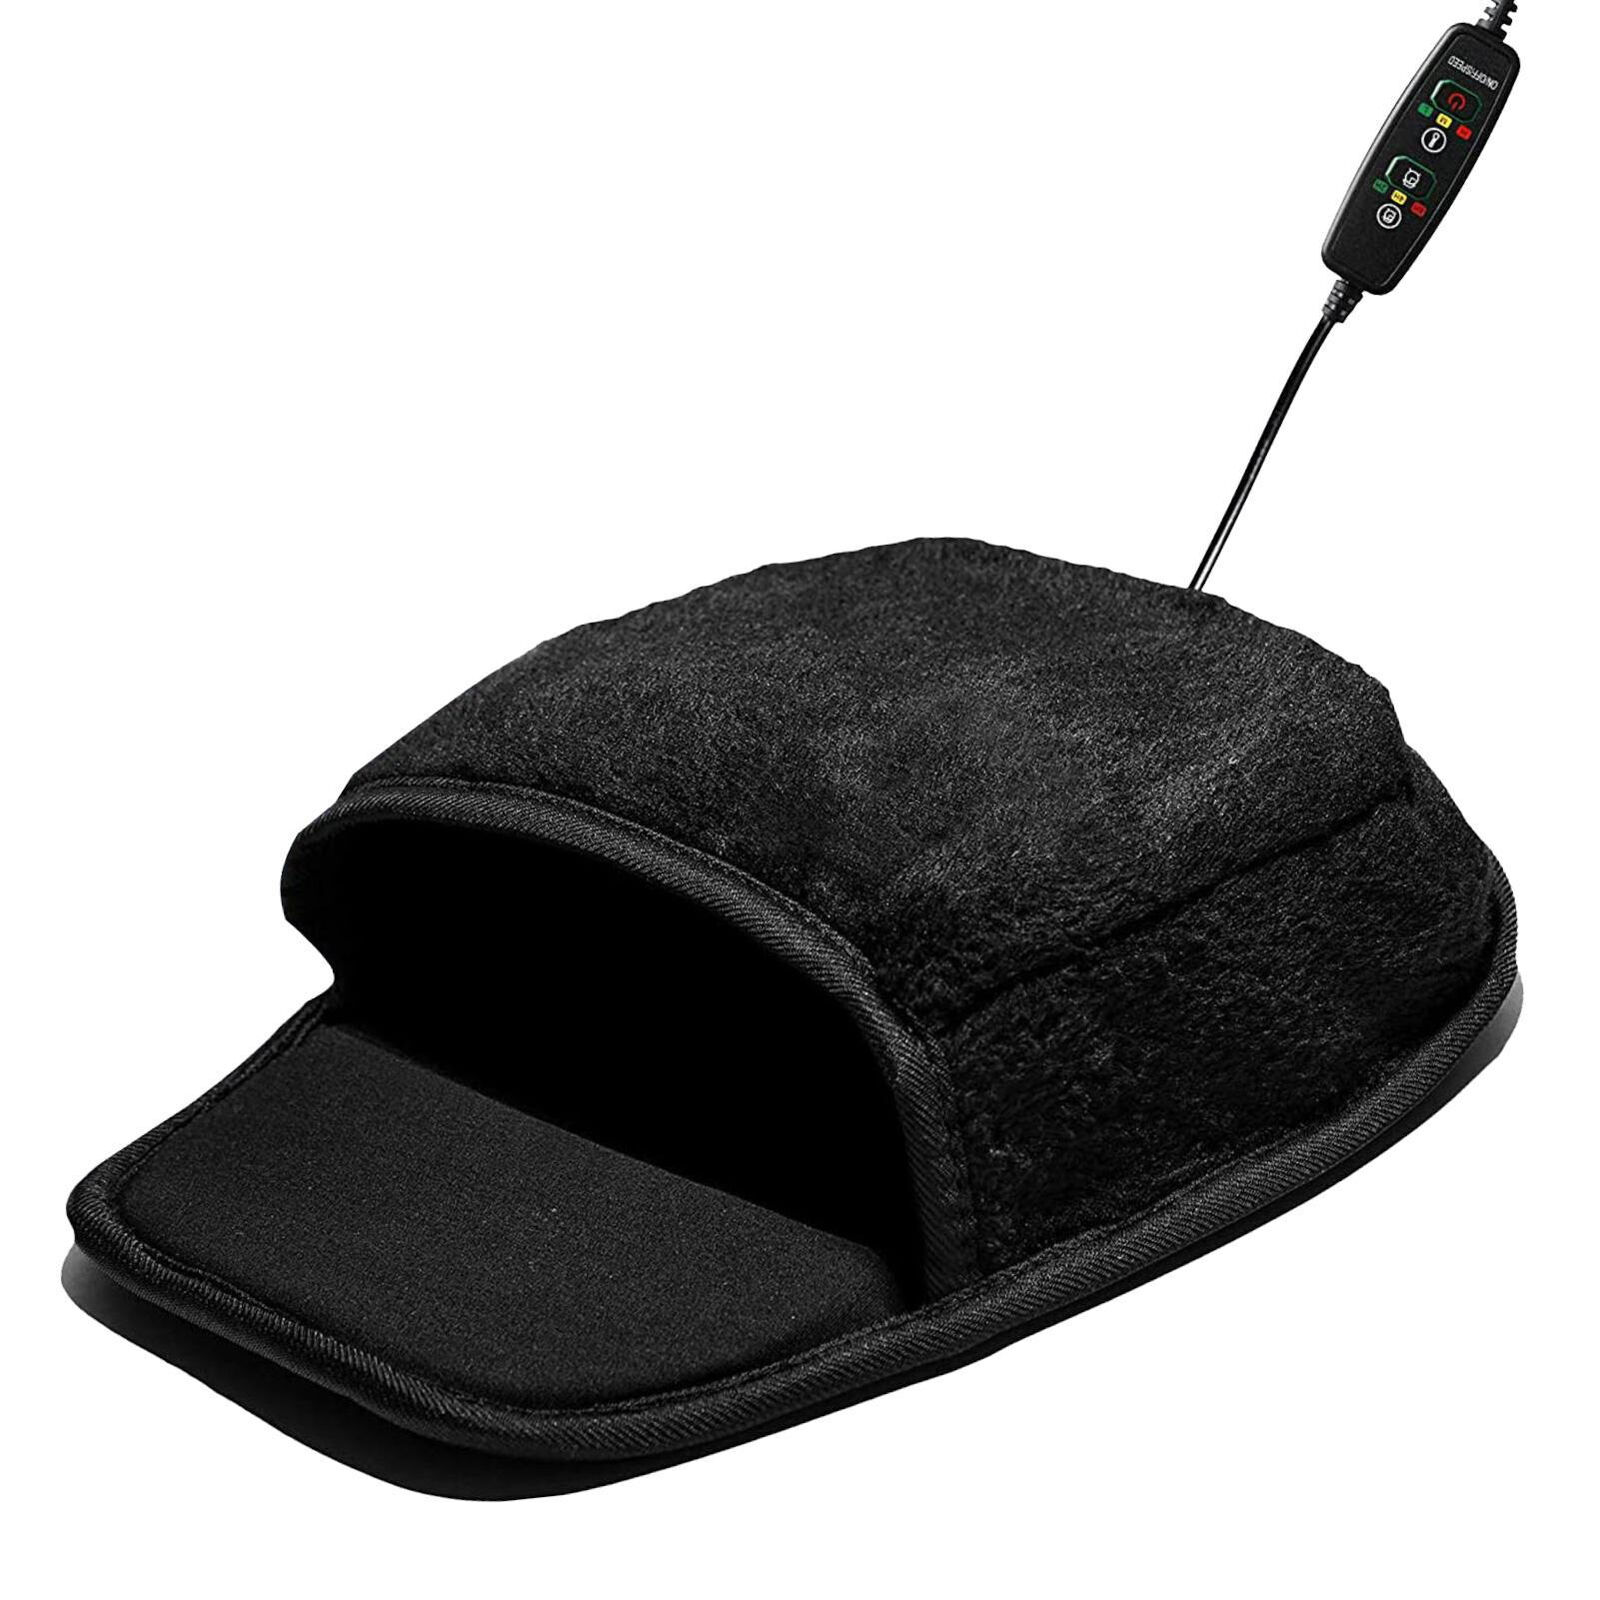 Winter Hand Warmer Heated Pad Wrist Mouse Pad USB Power Mouse Heating Mat Warm